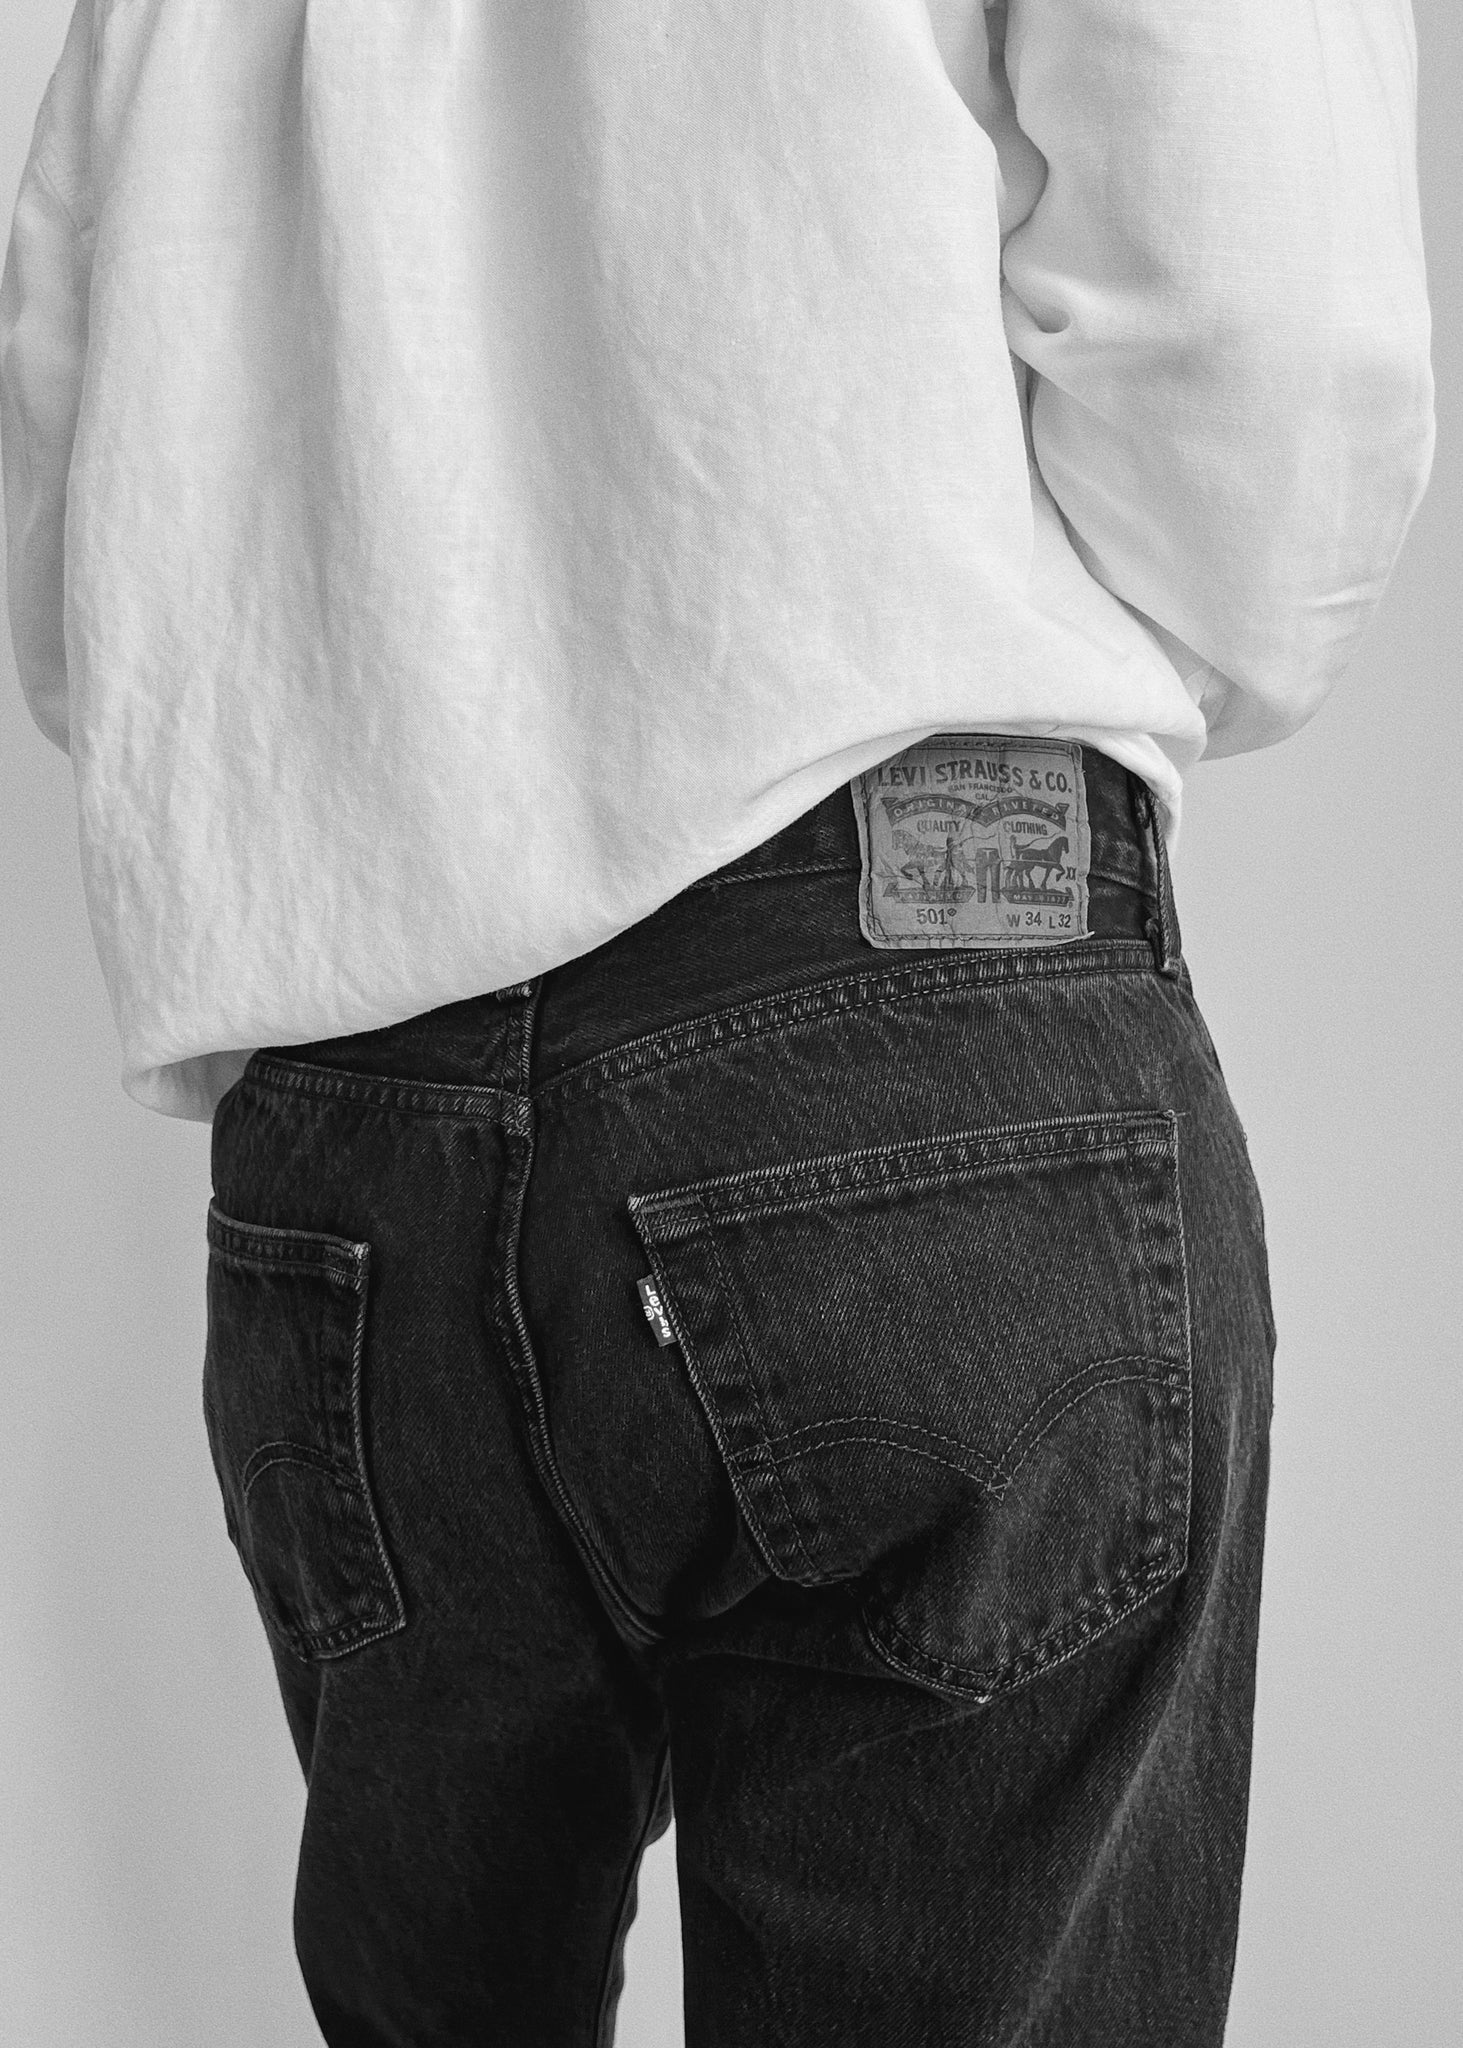 Black Levi's 501 Jeans